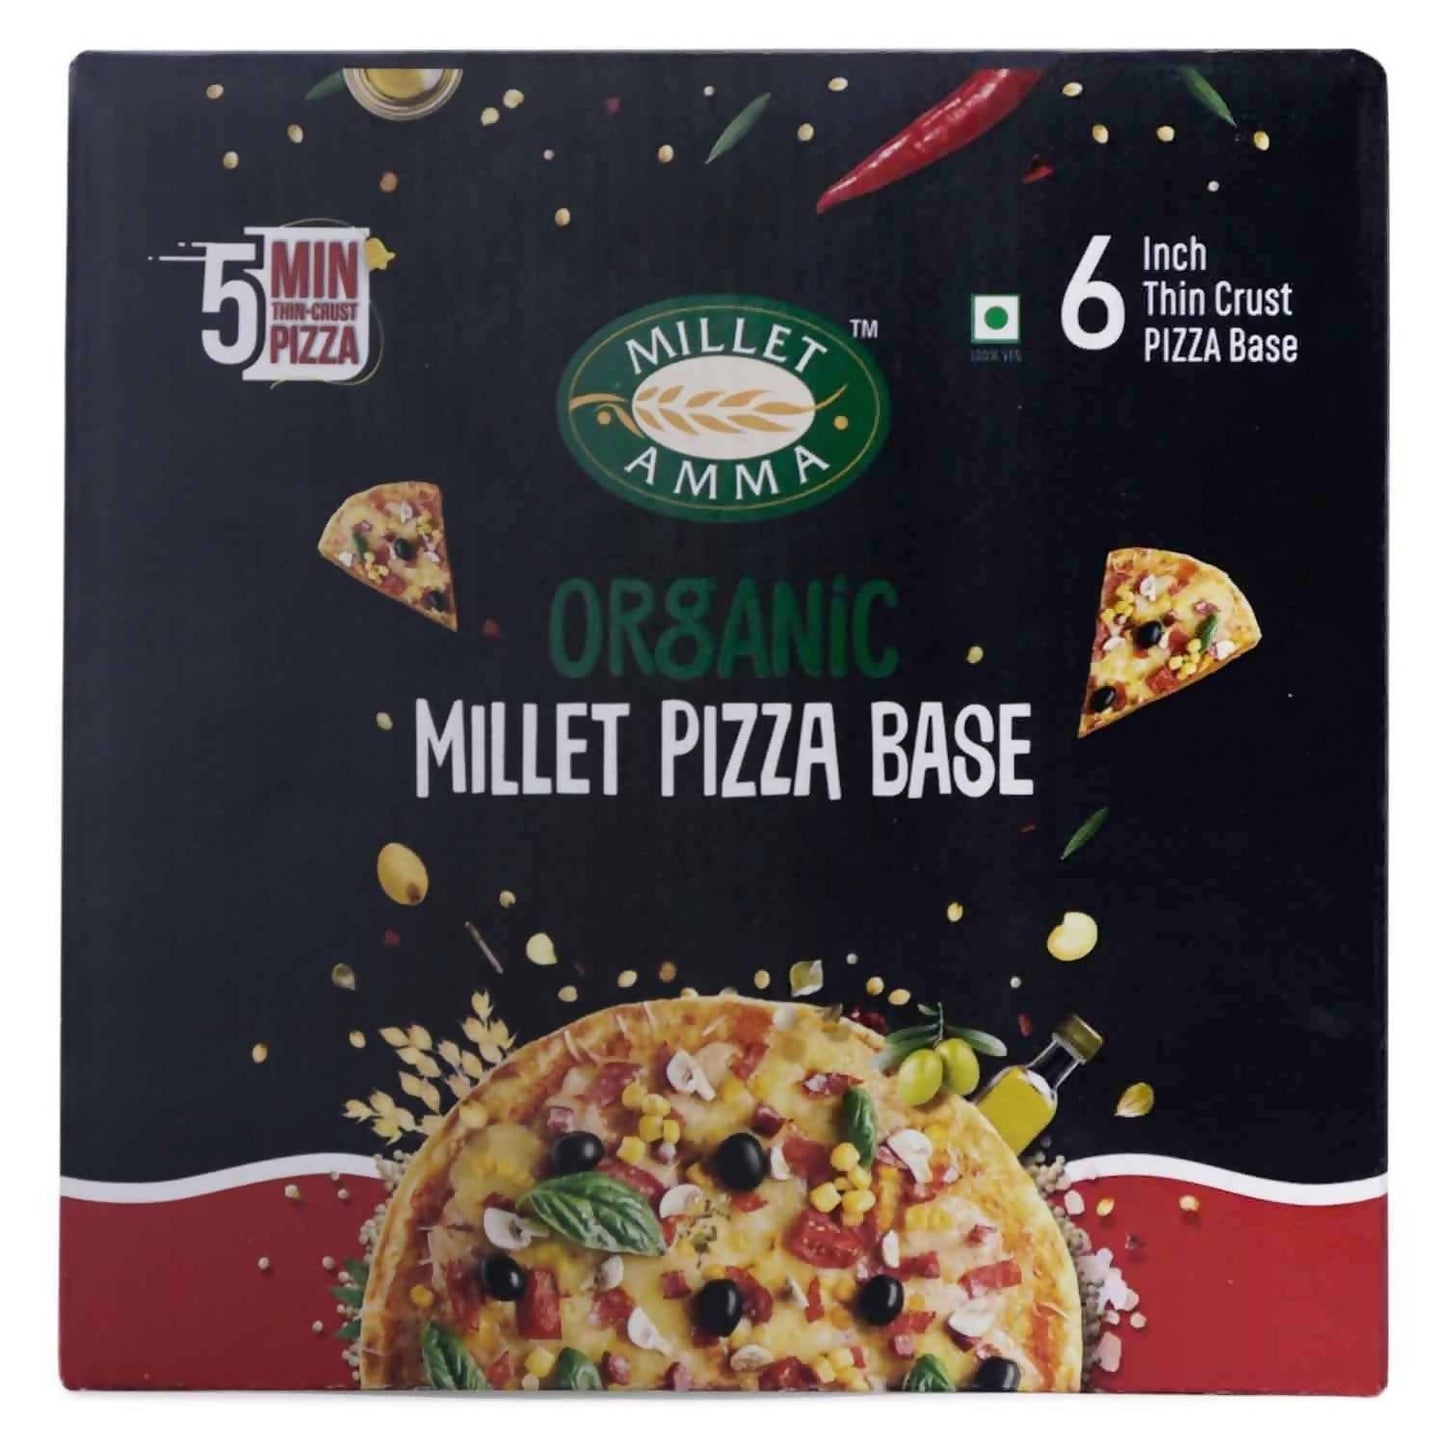 Millet Amma Organic Millet Pizza Base - buy in USA, Australia, Canada